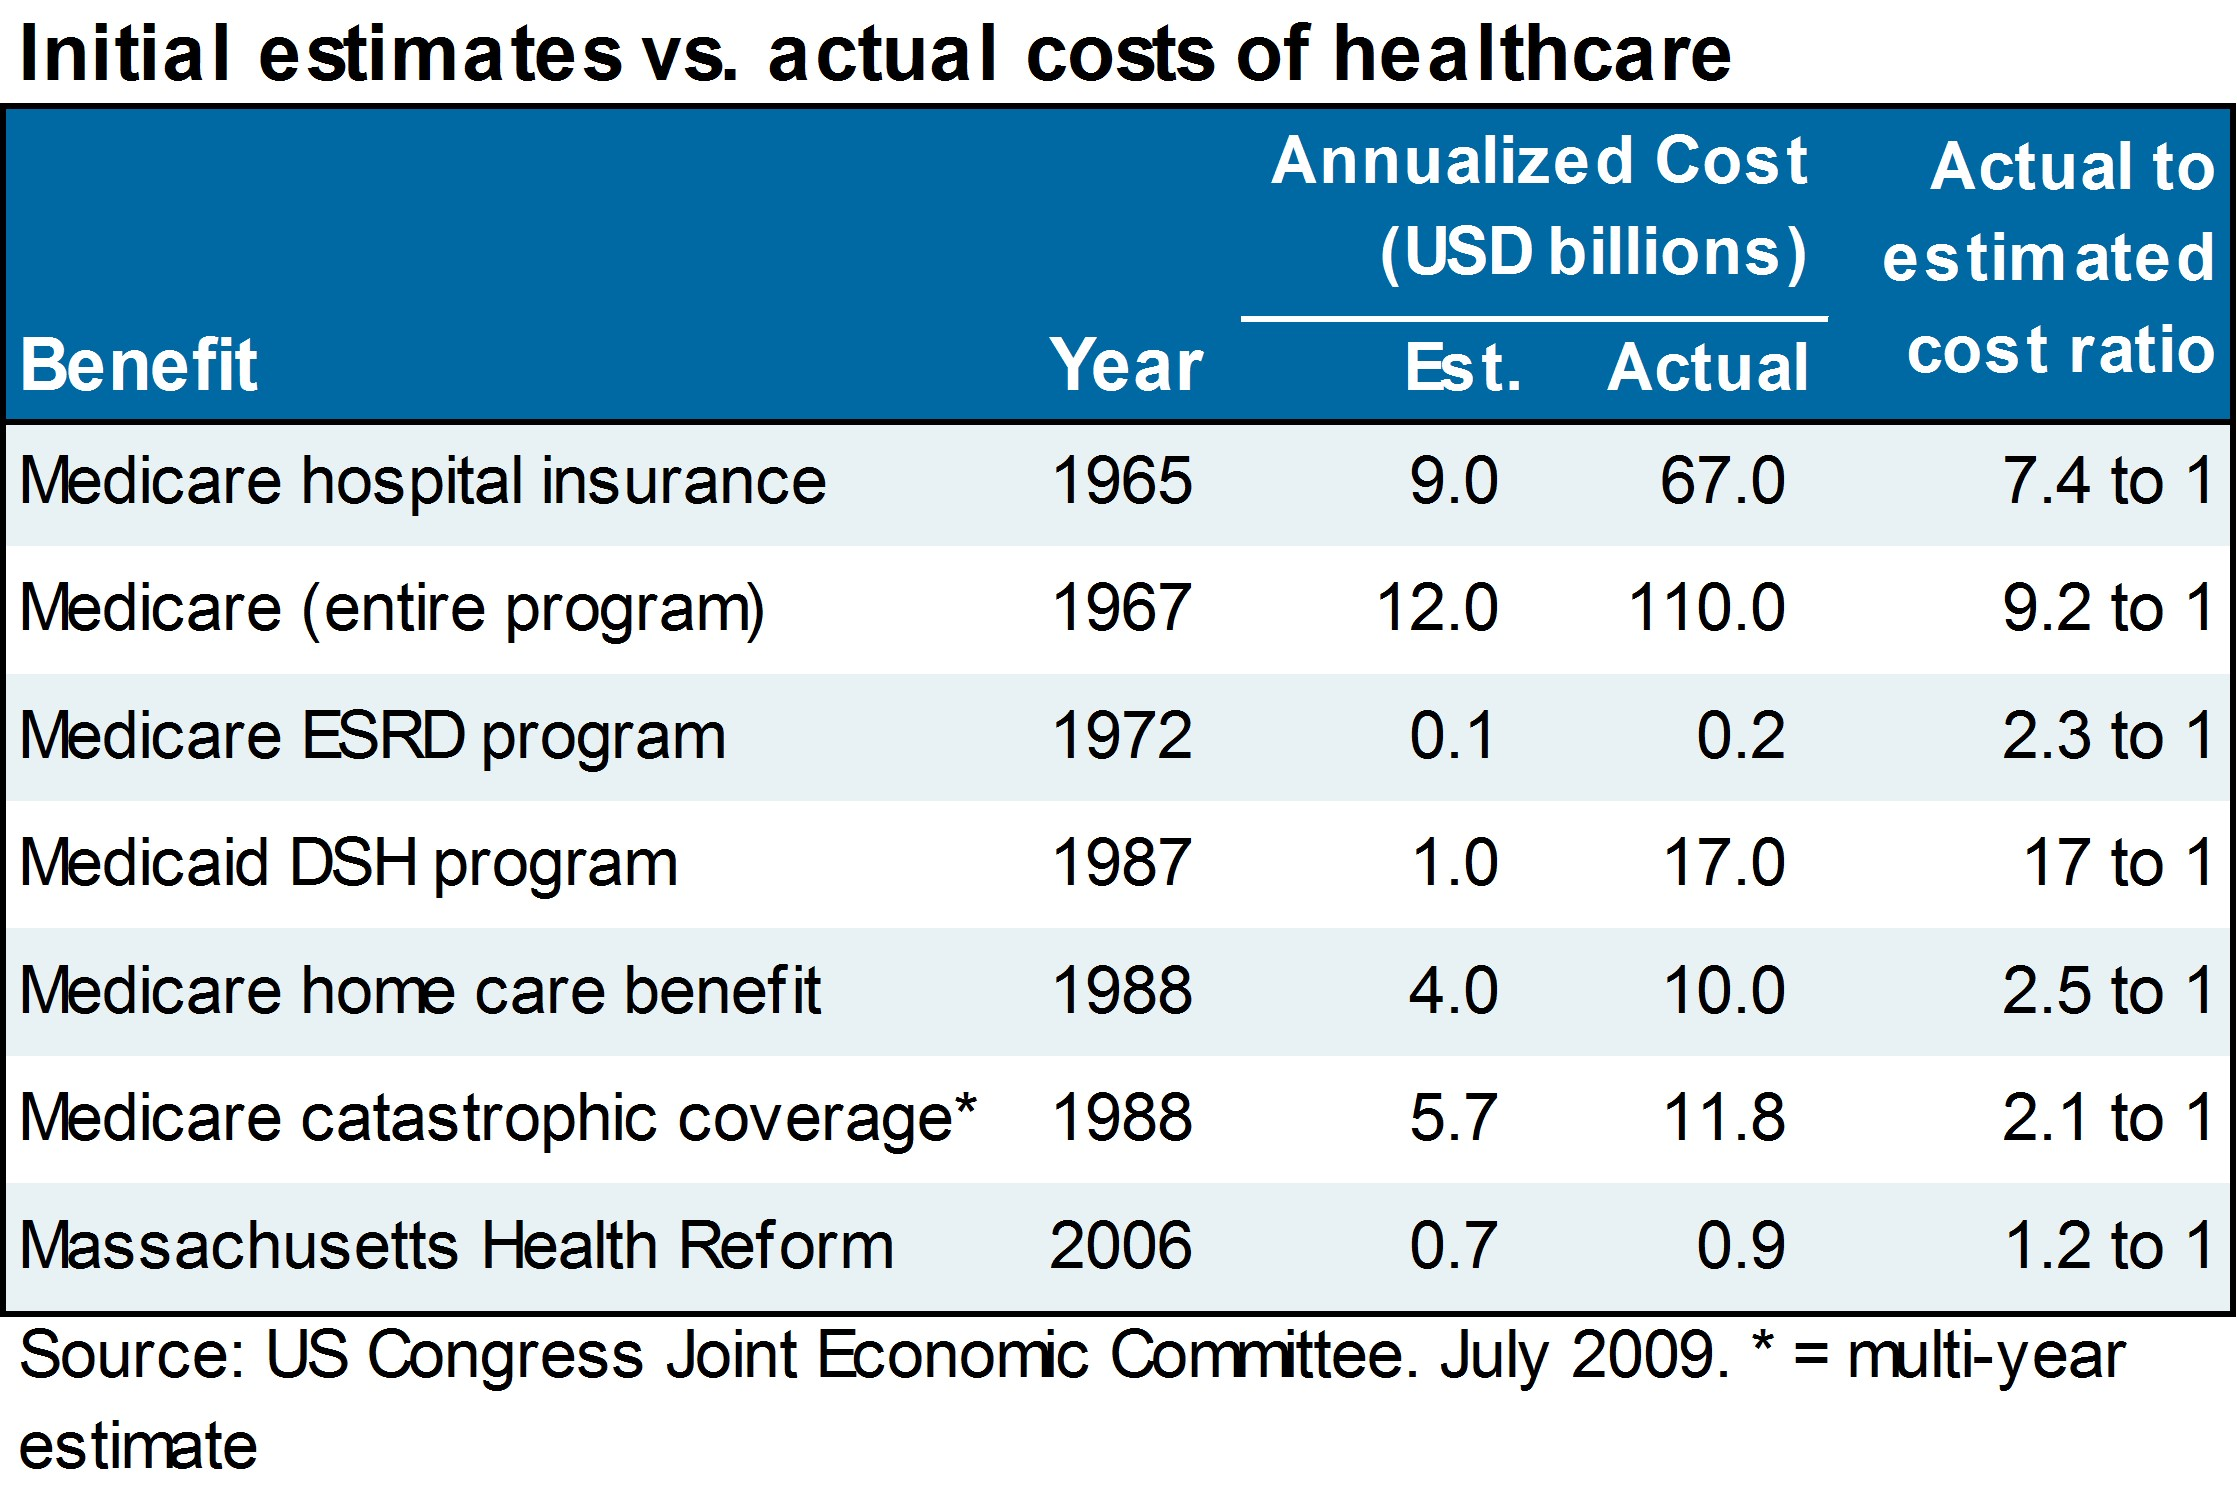 Initial estimate vs. actual costs of healthcare